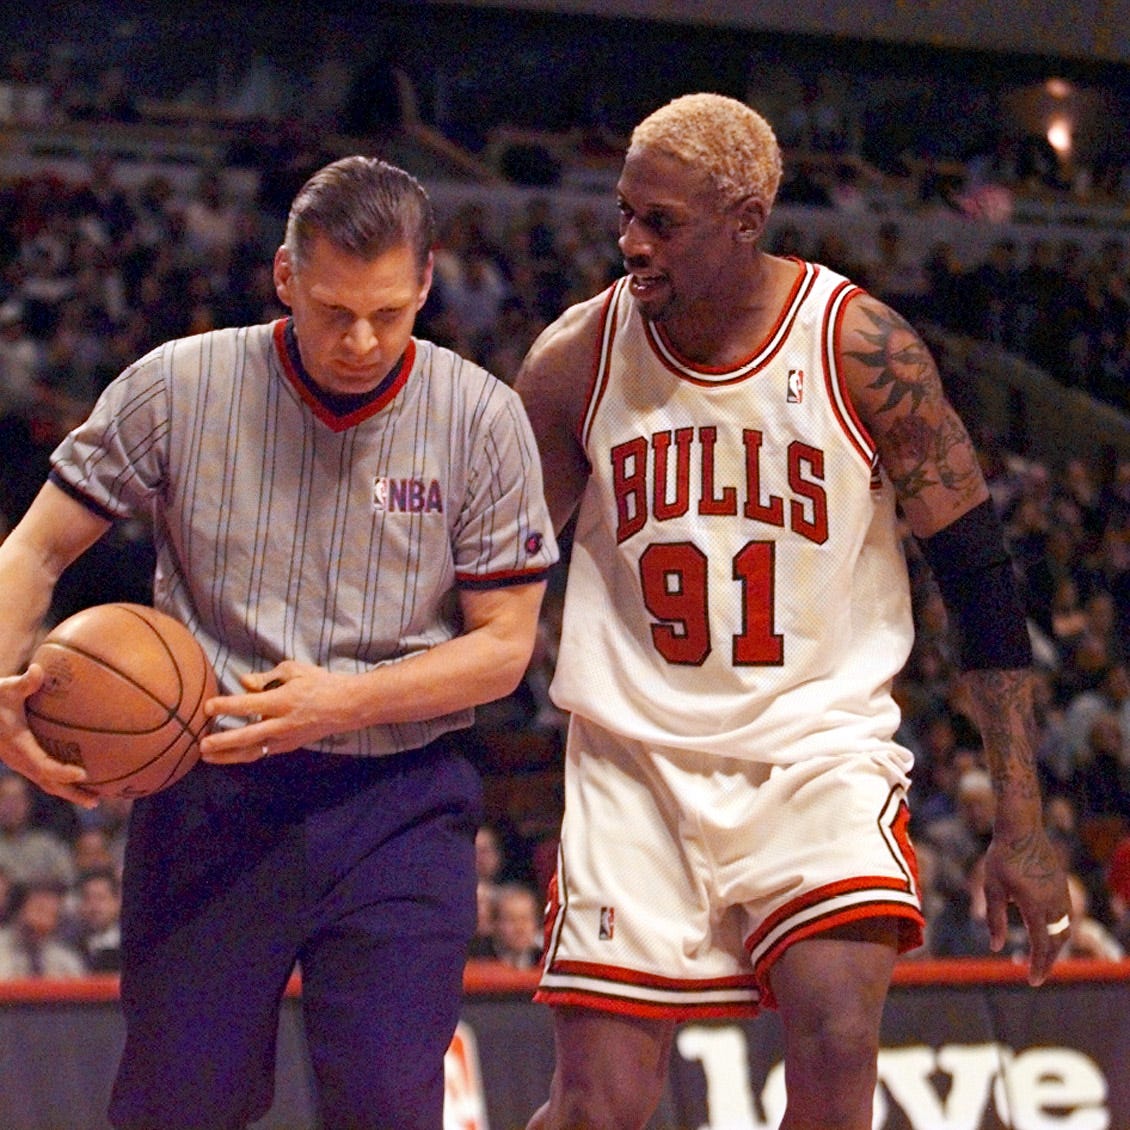 No Fooling: Detroit Pistons to Retire Rodman's Jersey Tonight